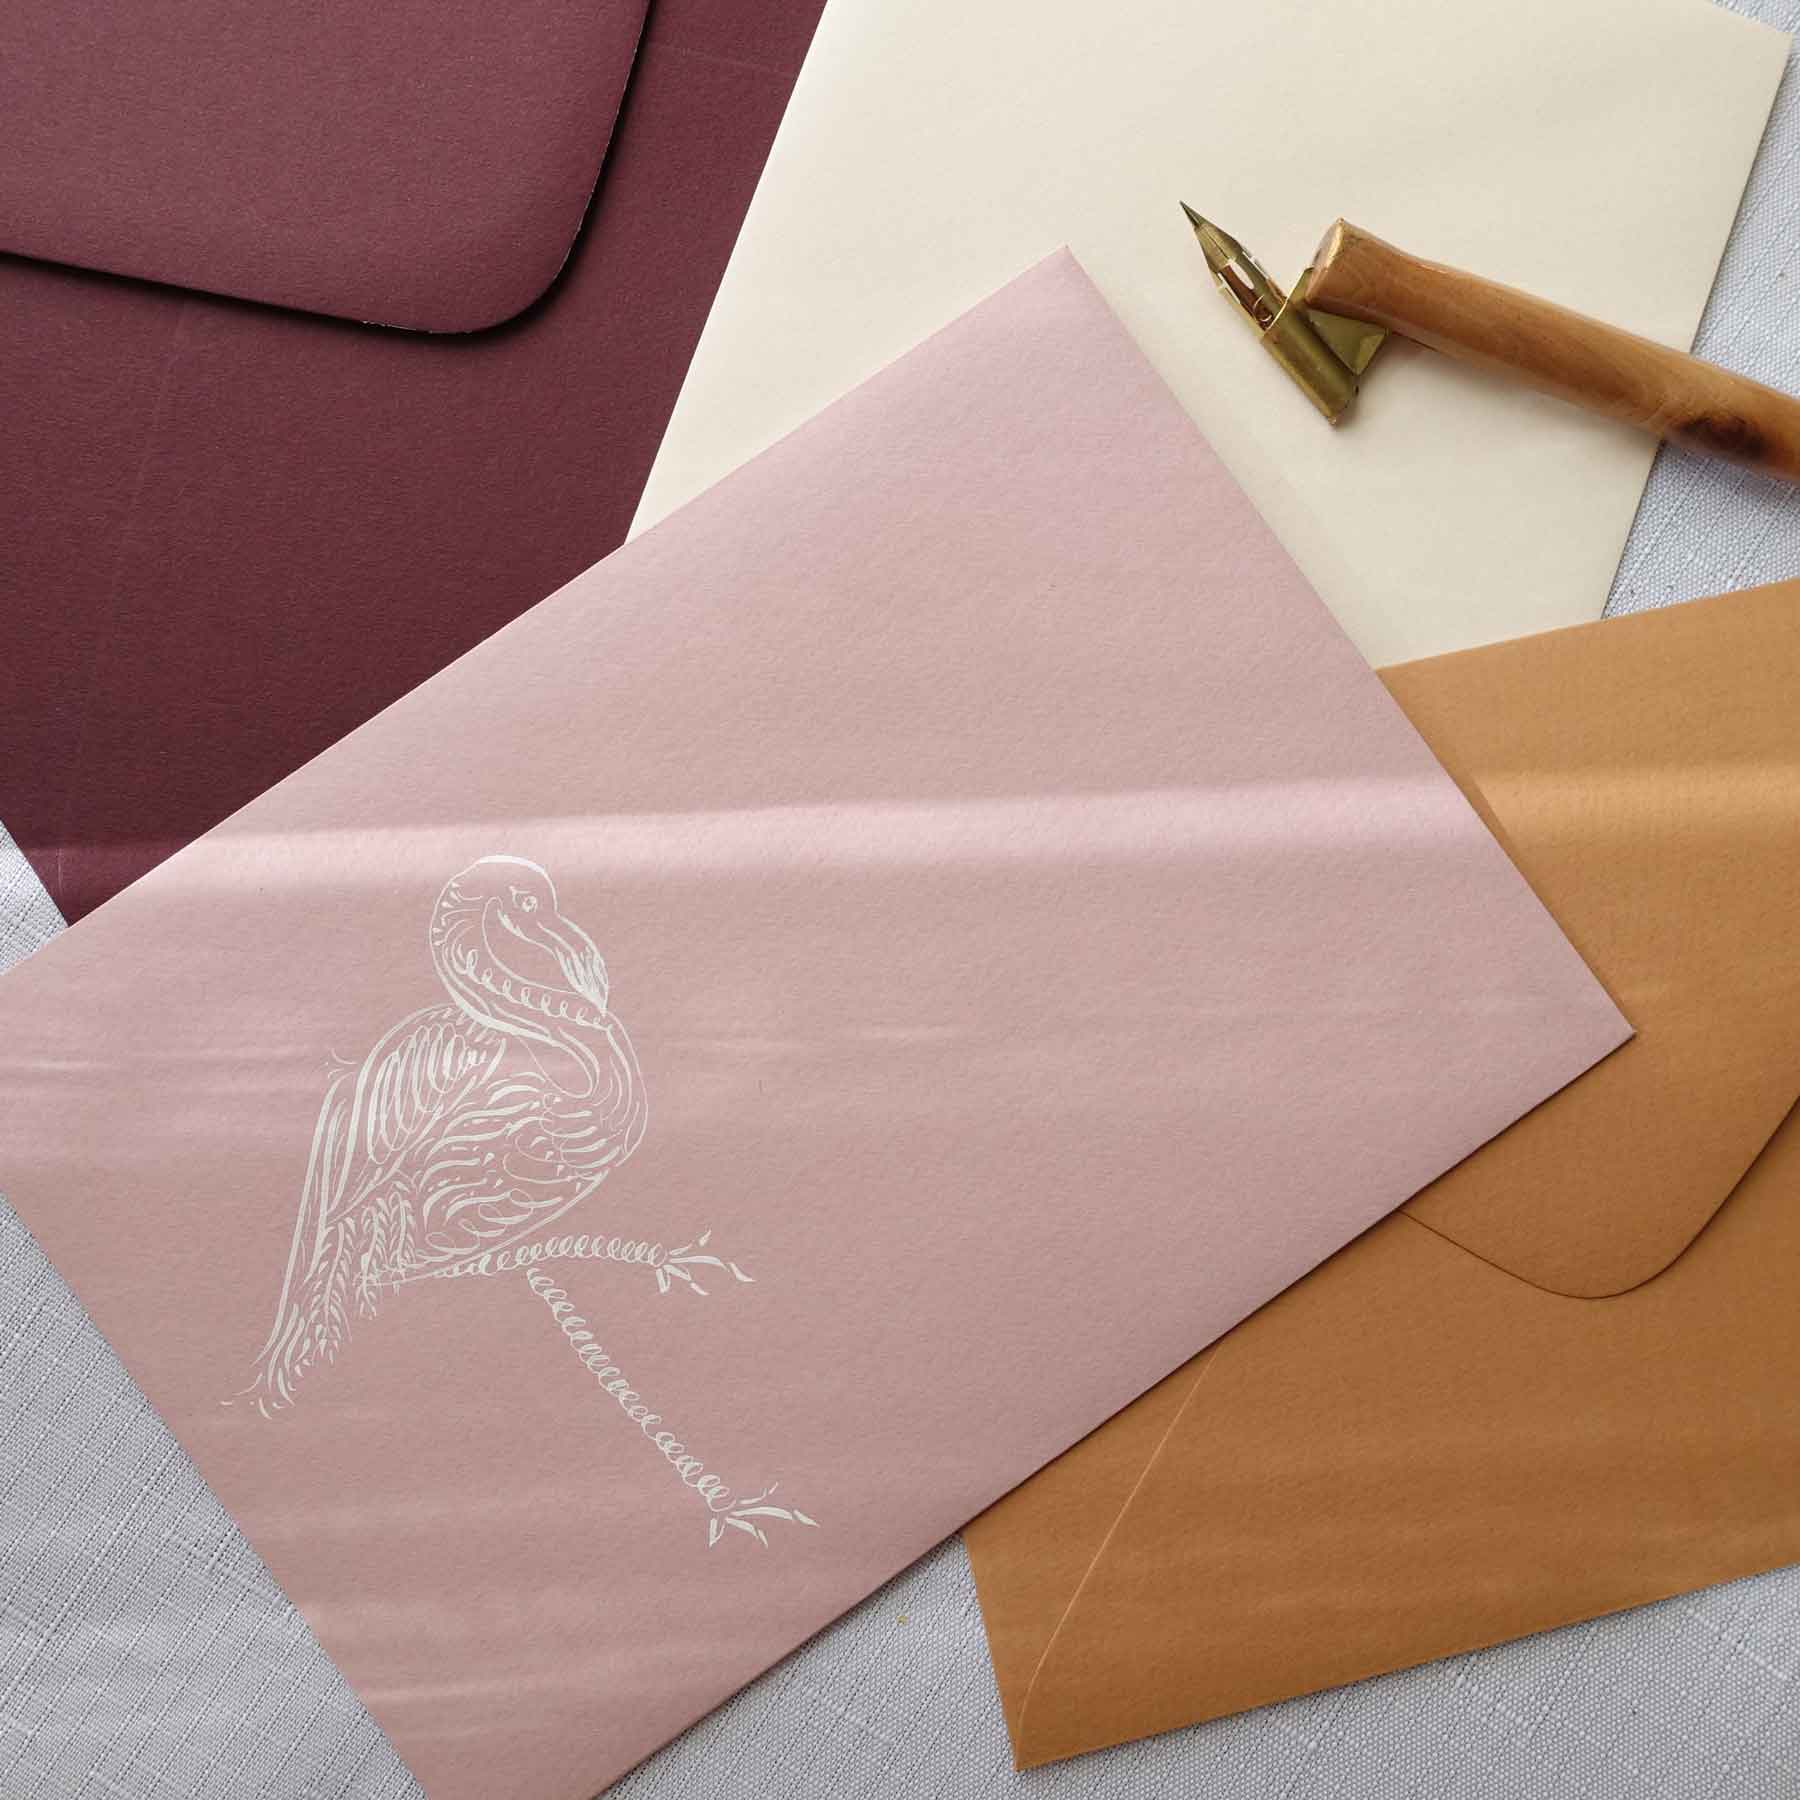 Flamingo animal calligraphy flourishing on pink and terracotta envelope